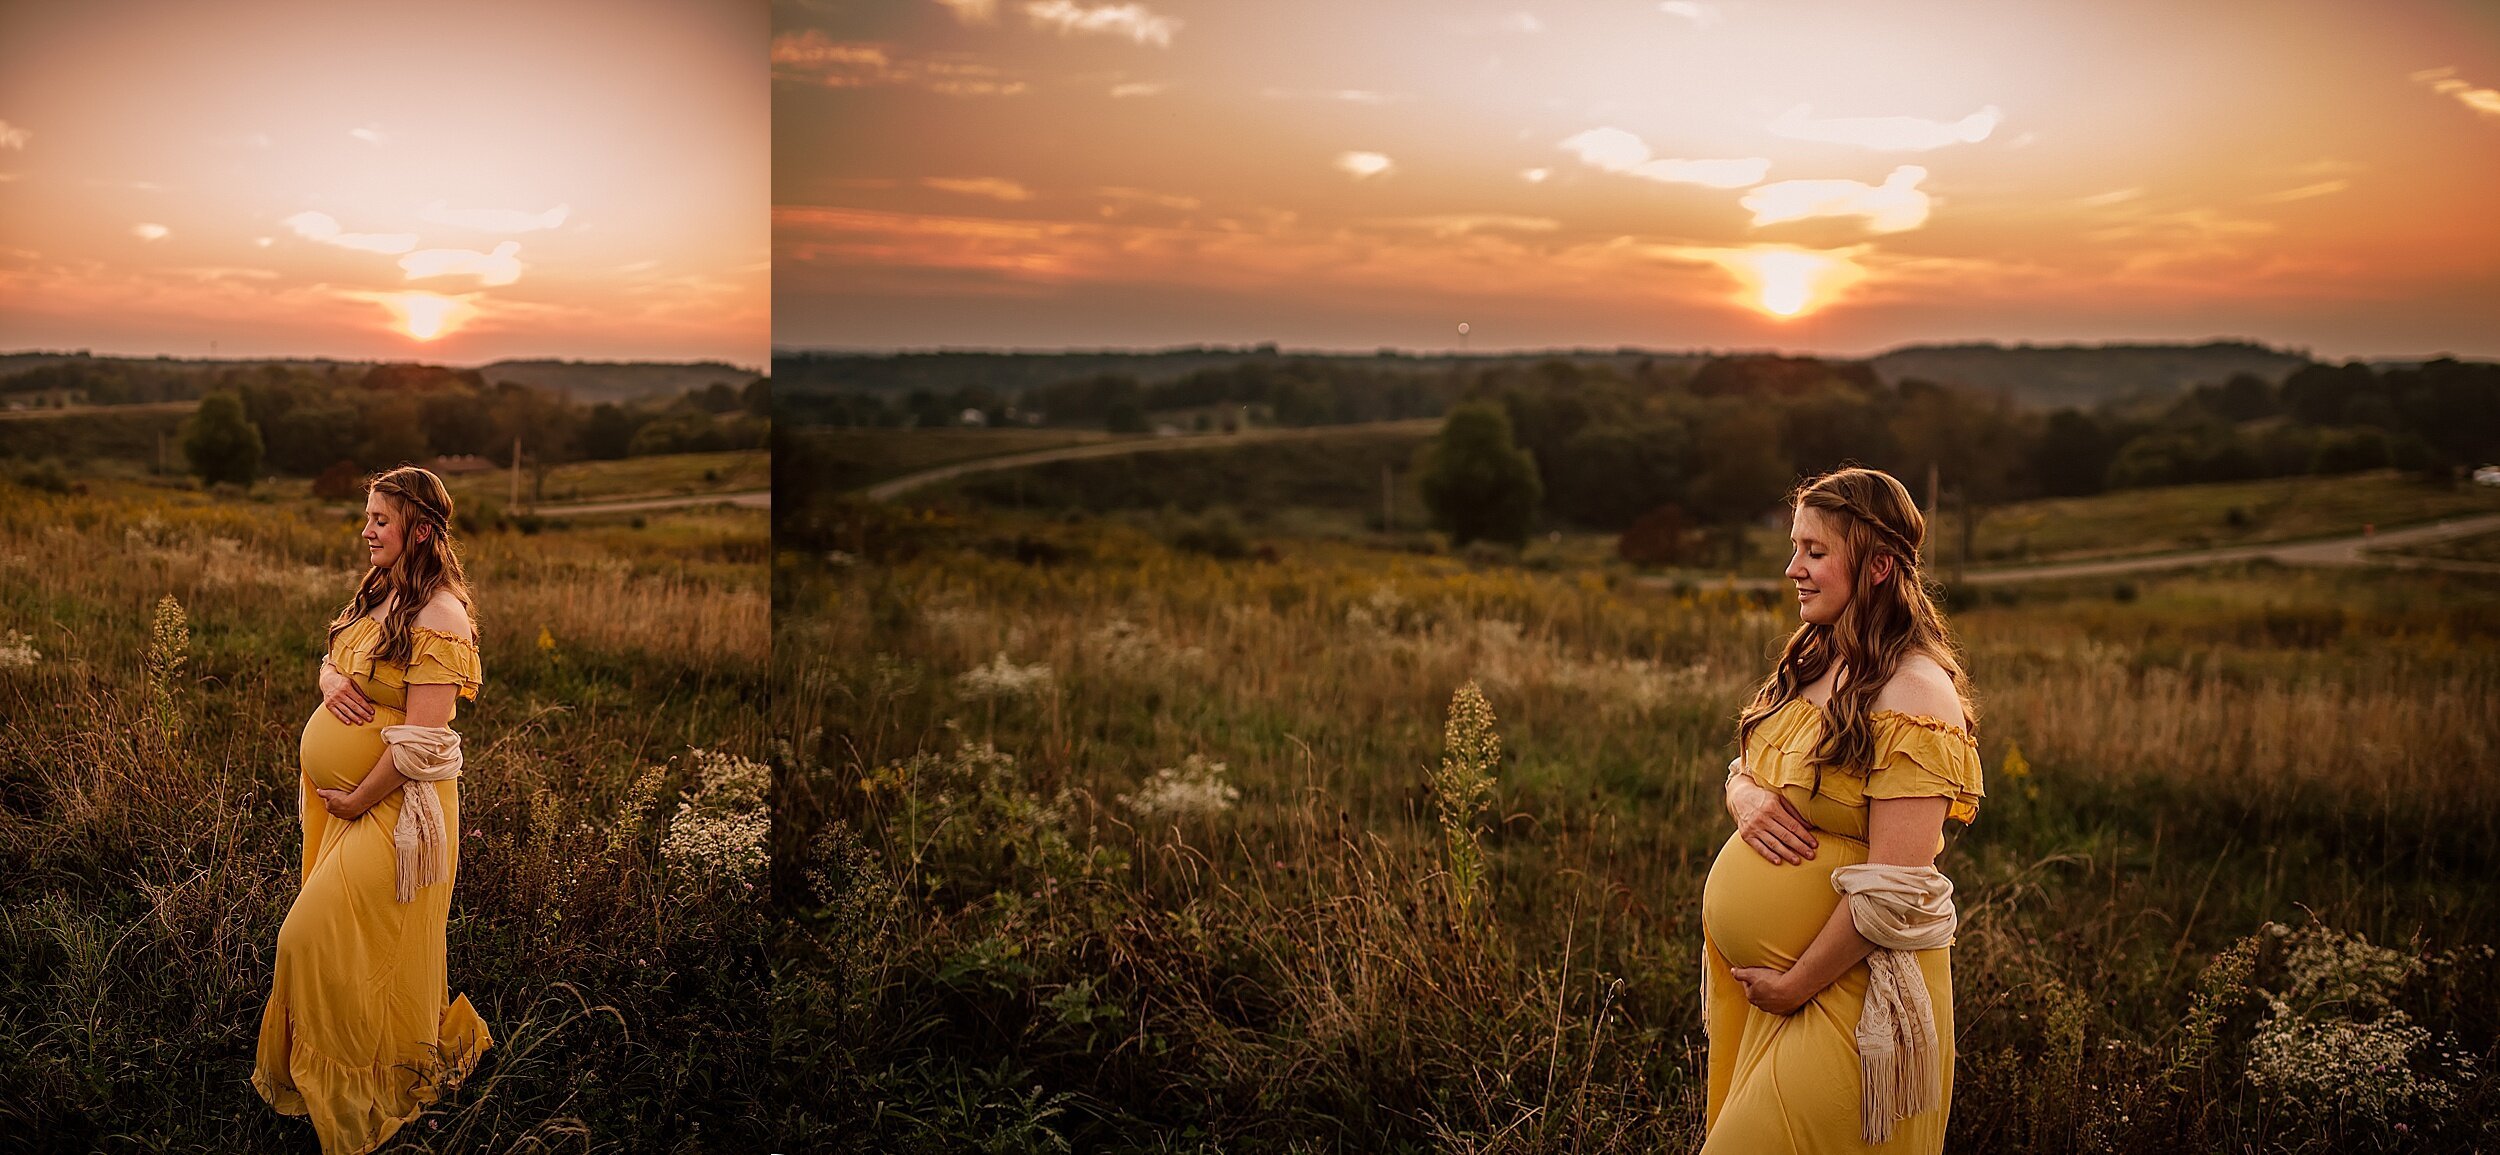 canton-ohio-family-frye-family-park-maternity-session-outdoor-sunset-fields-lauren-grayson-photography_0125.jpeg